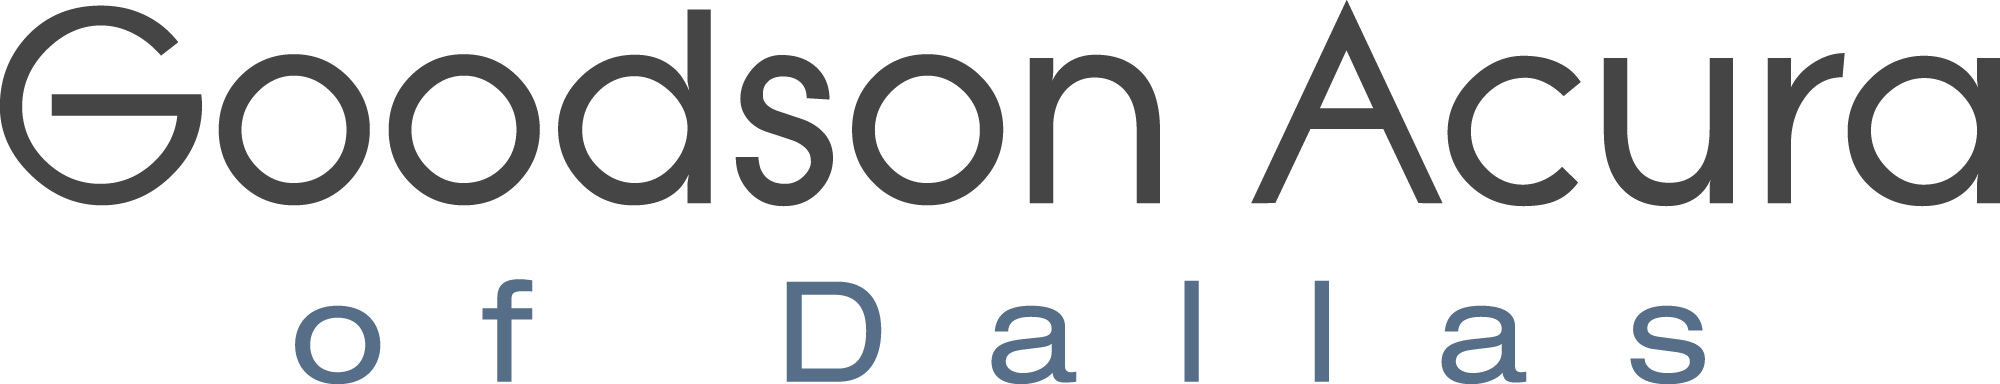 Goodson Acura logo (1)